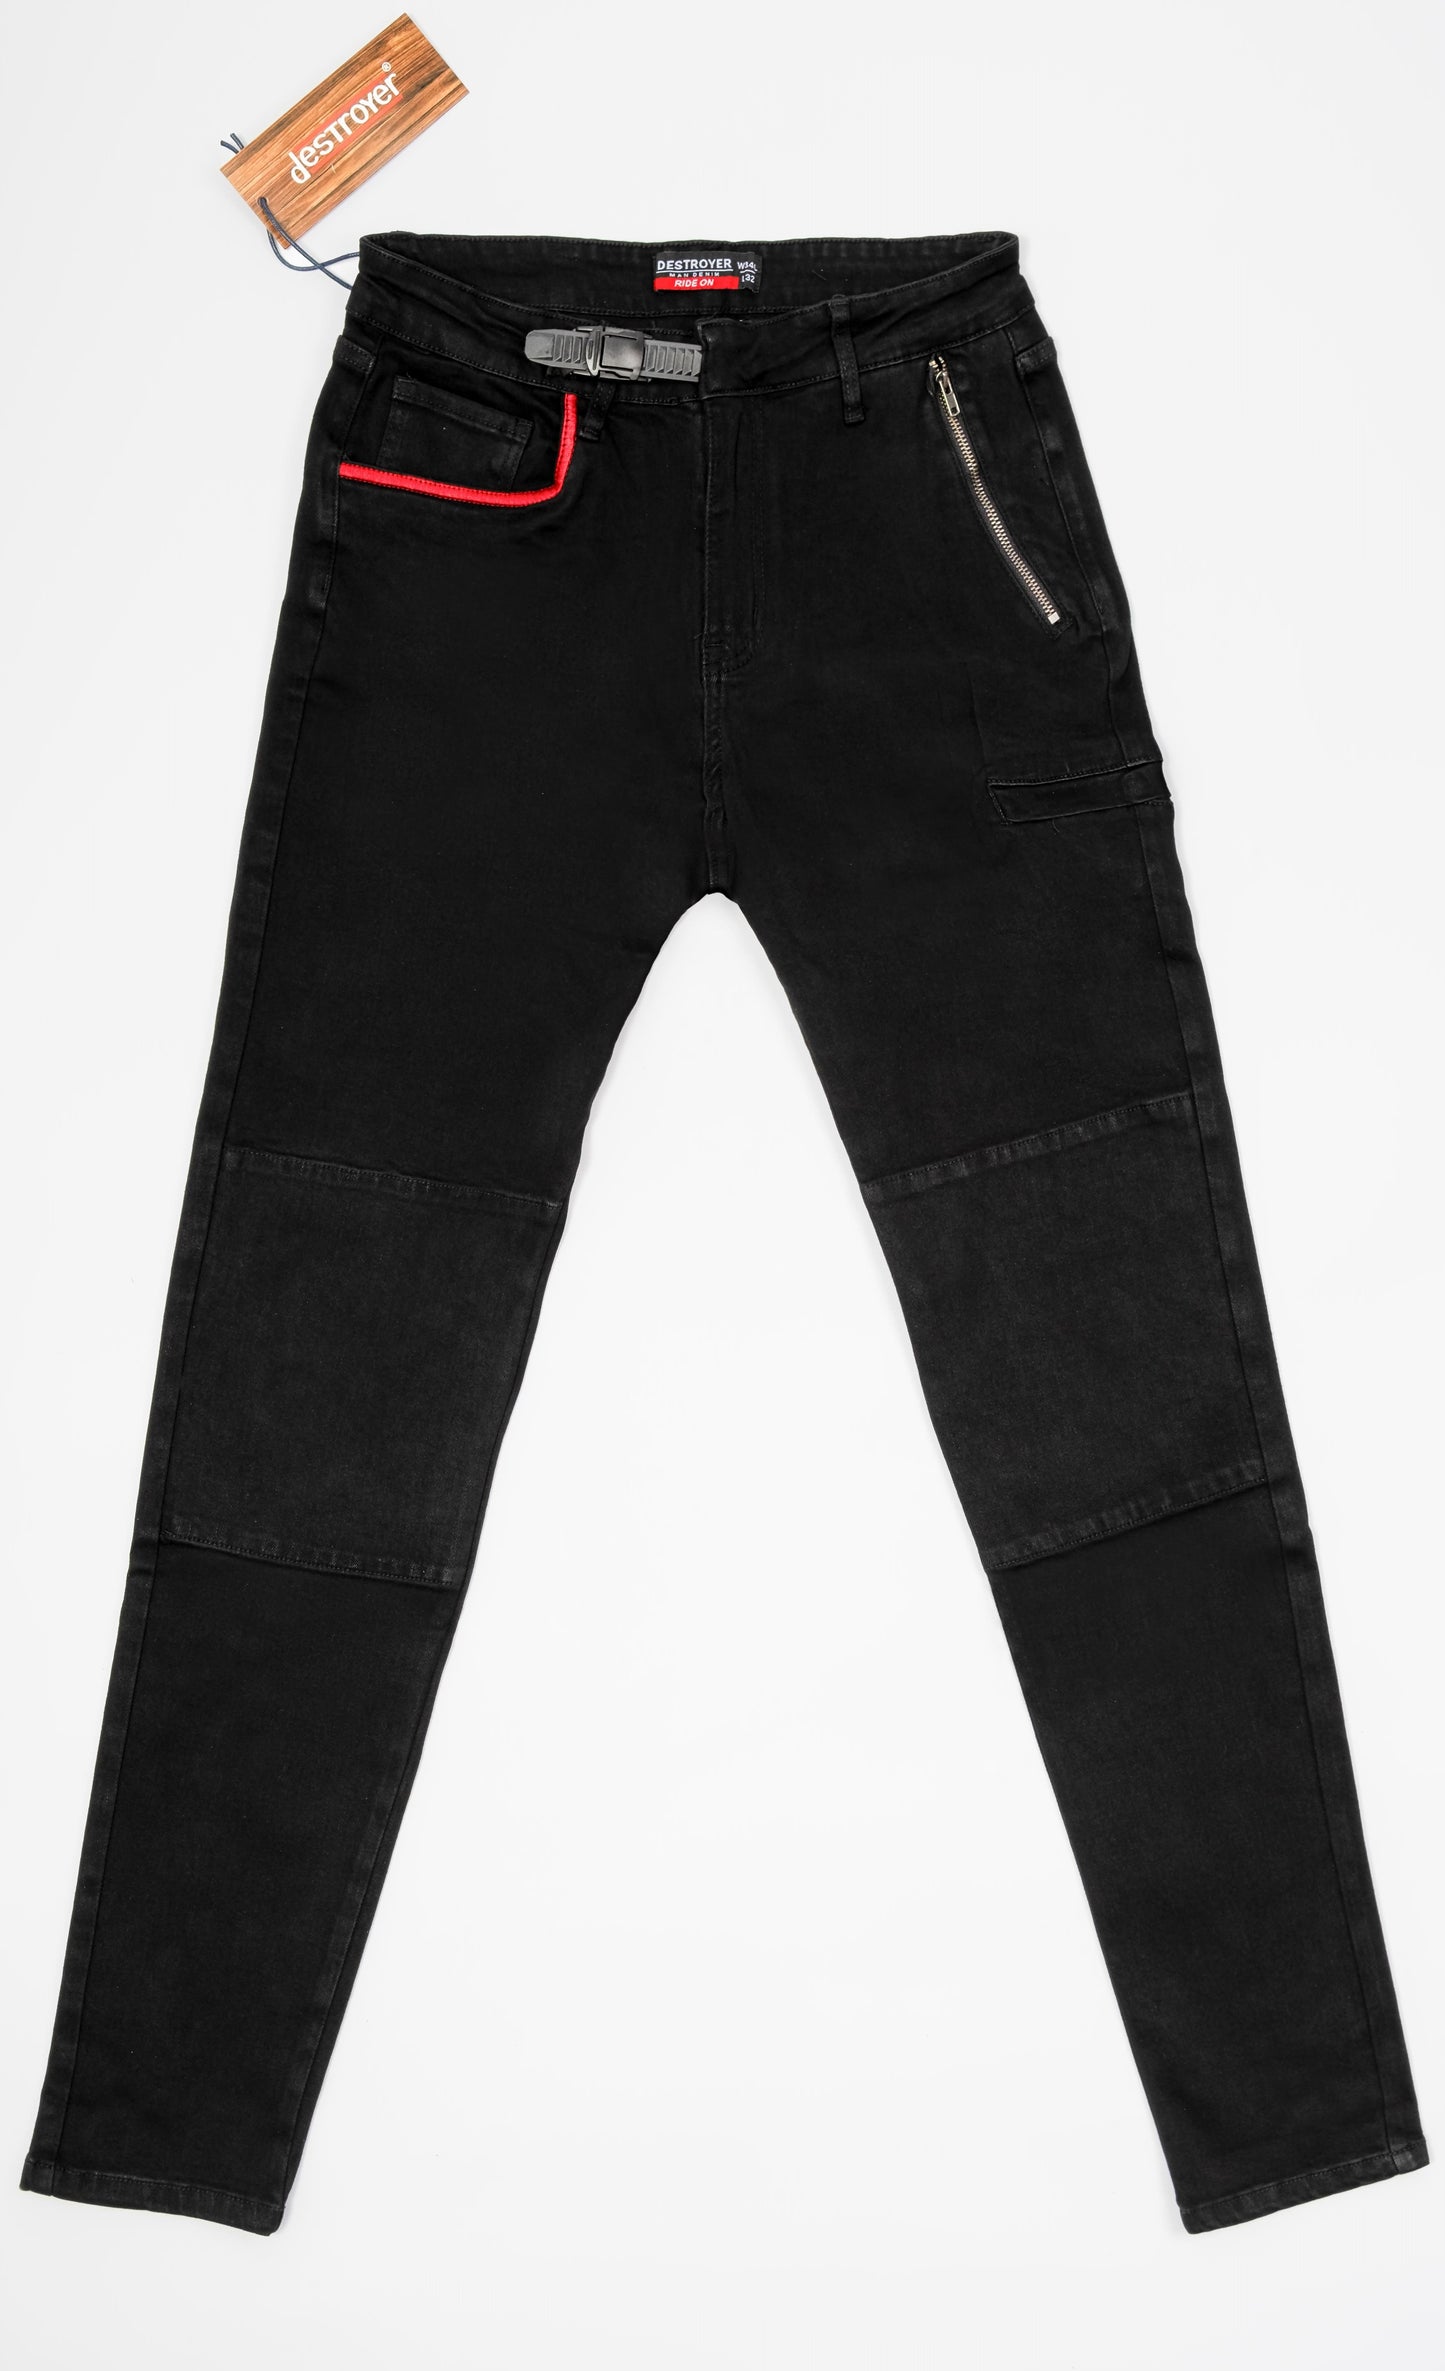 DH2 Downhill Jeans Pants black